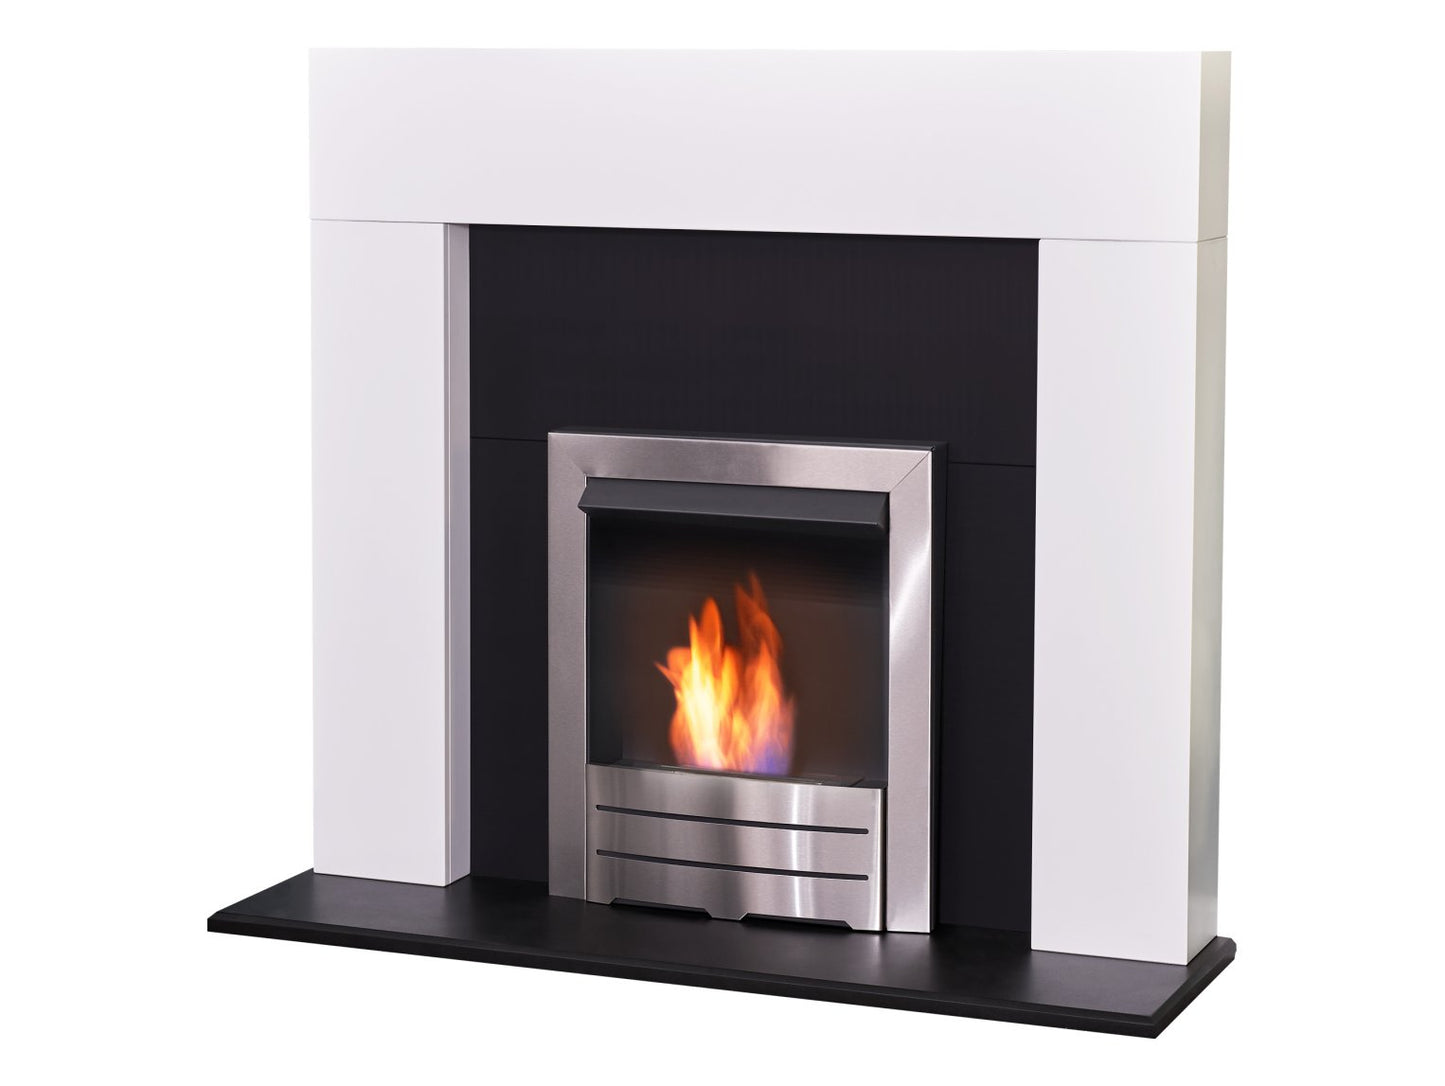 Adam Miami Fireplace Pure White & Black + Colorado Bio Ethanol Fire Brushed Steel, 48"